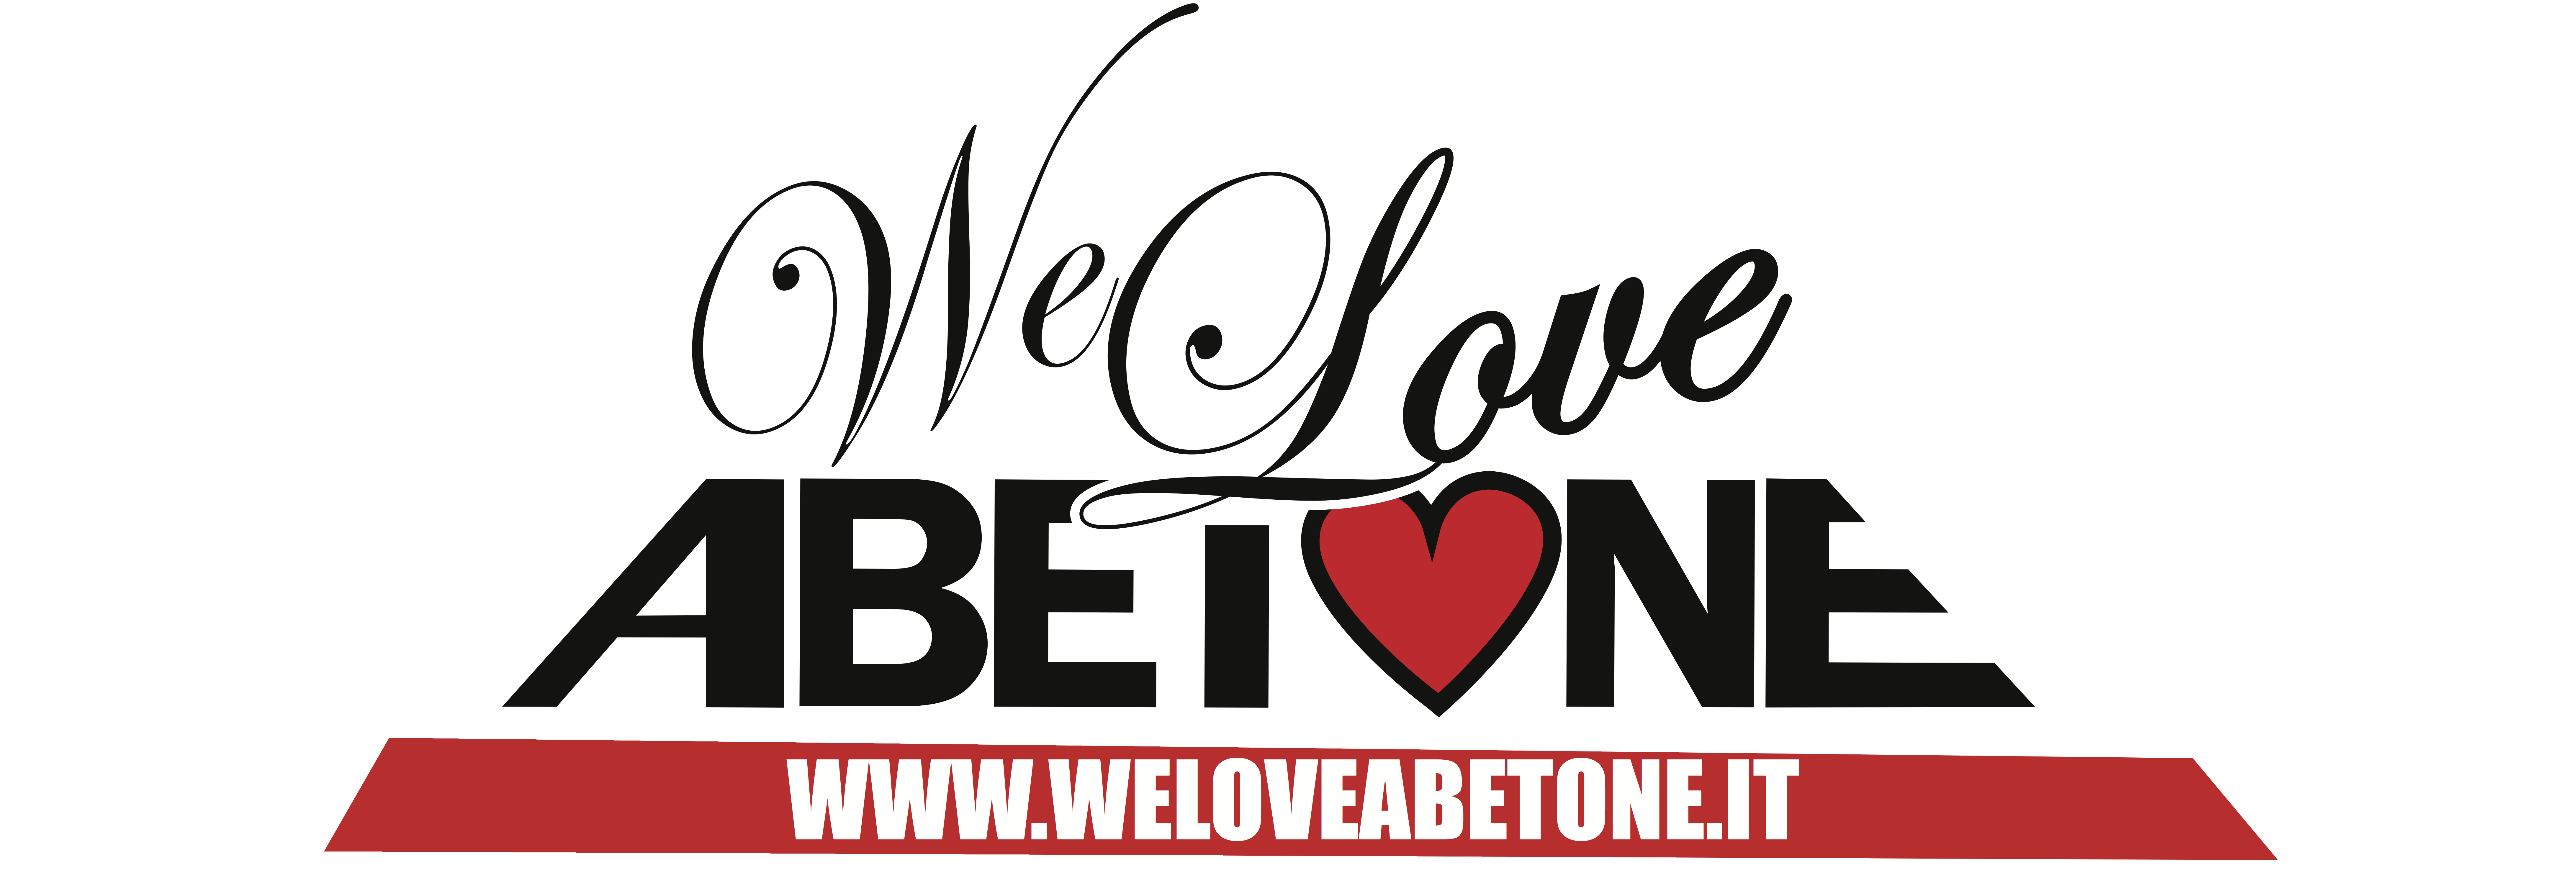 we love abetone logo uff